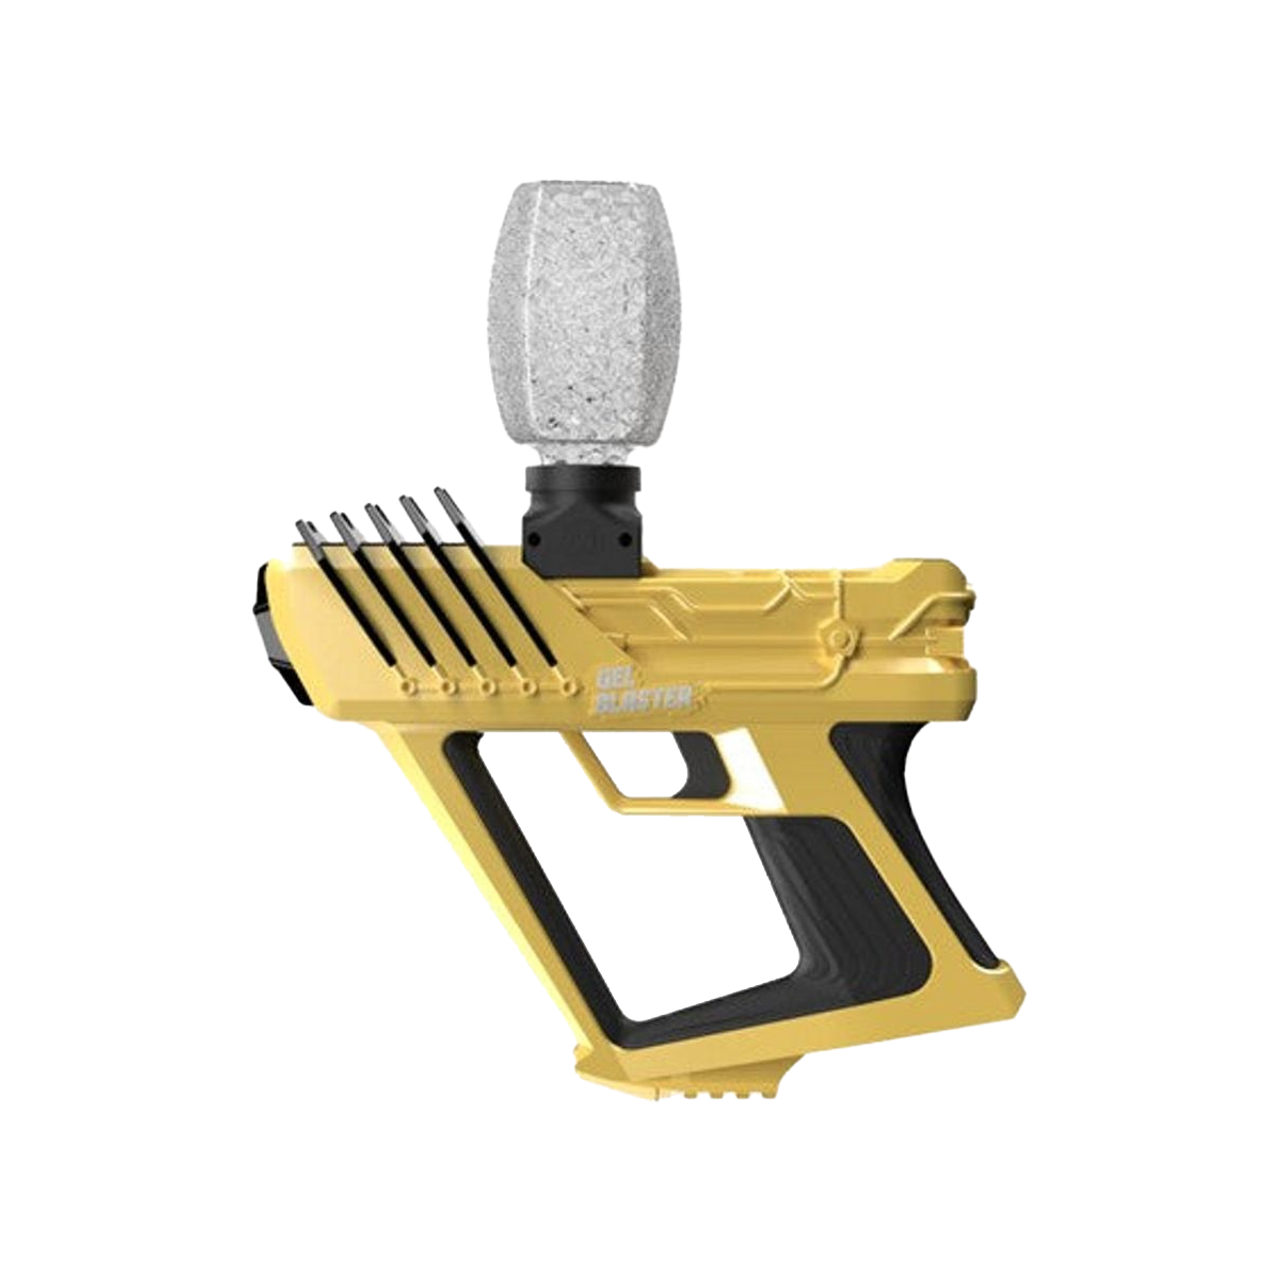 Gel Blaster® Surge Mayweather Gold Edition Toy Gun product image